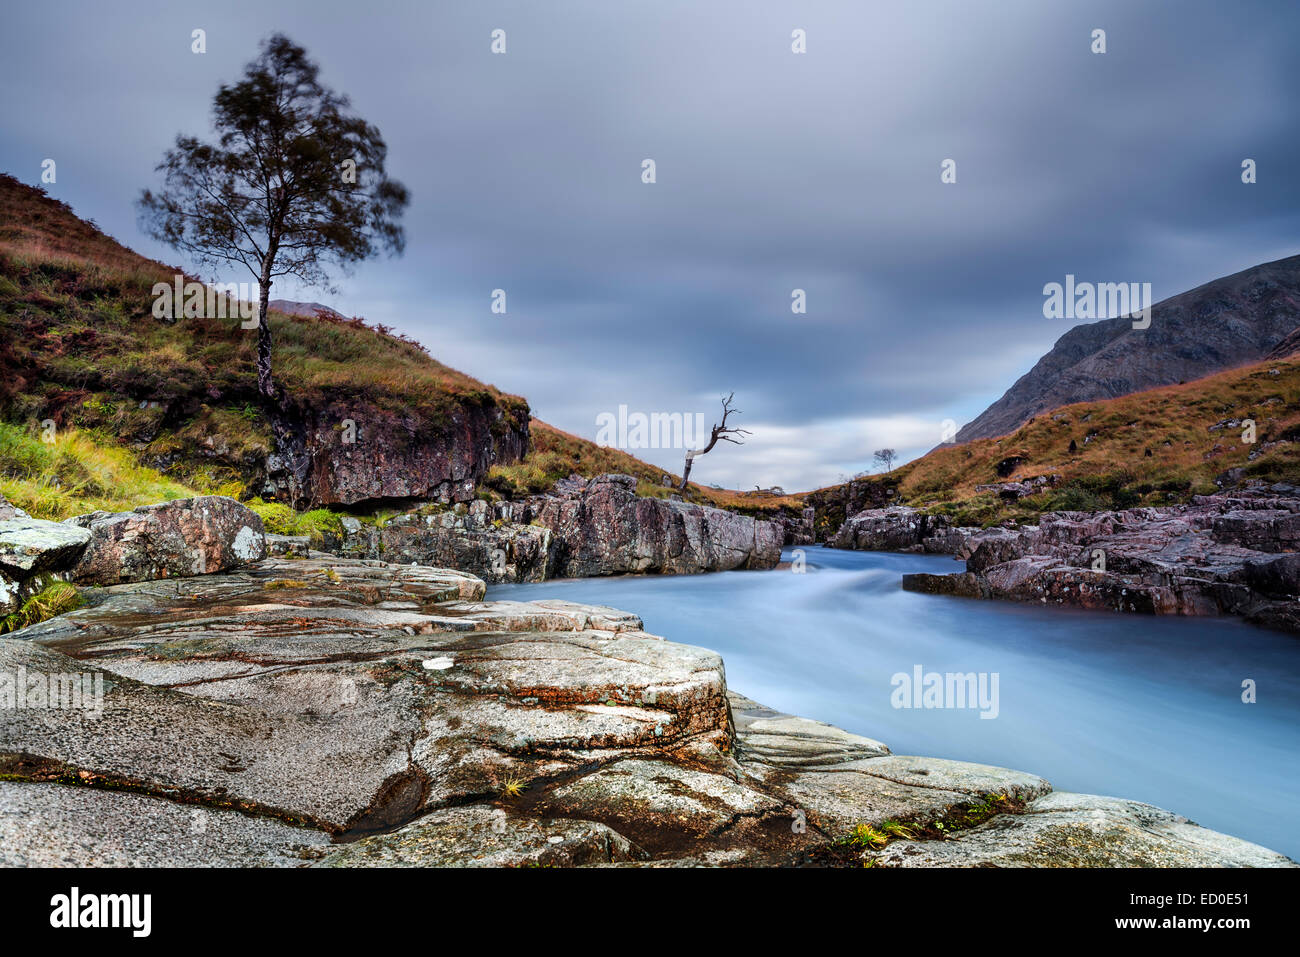 Scotland, Glencoe valley, Scenic view of landscape Stock Photo